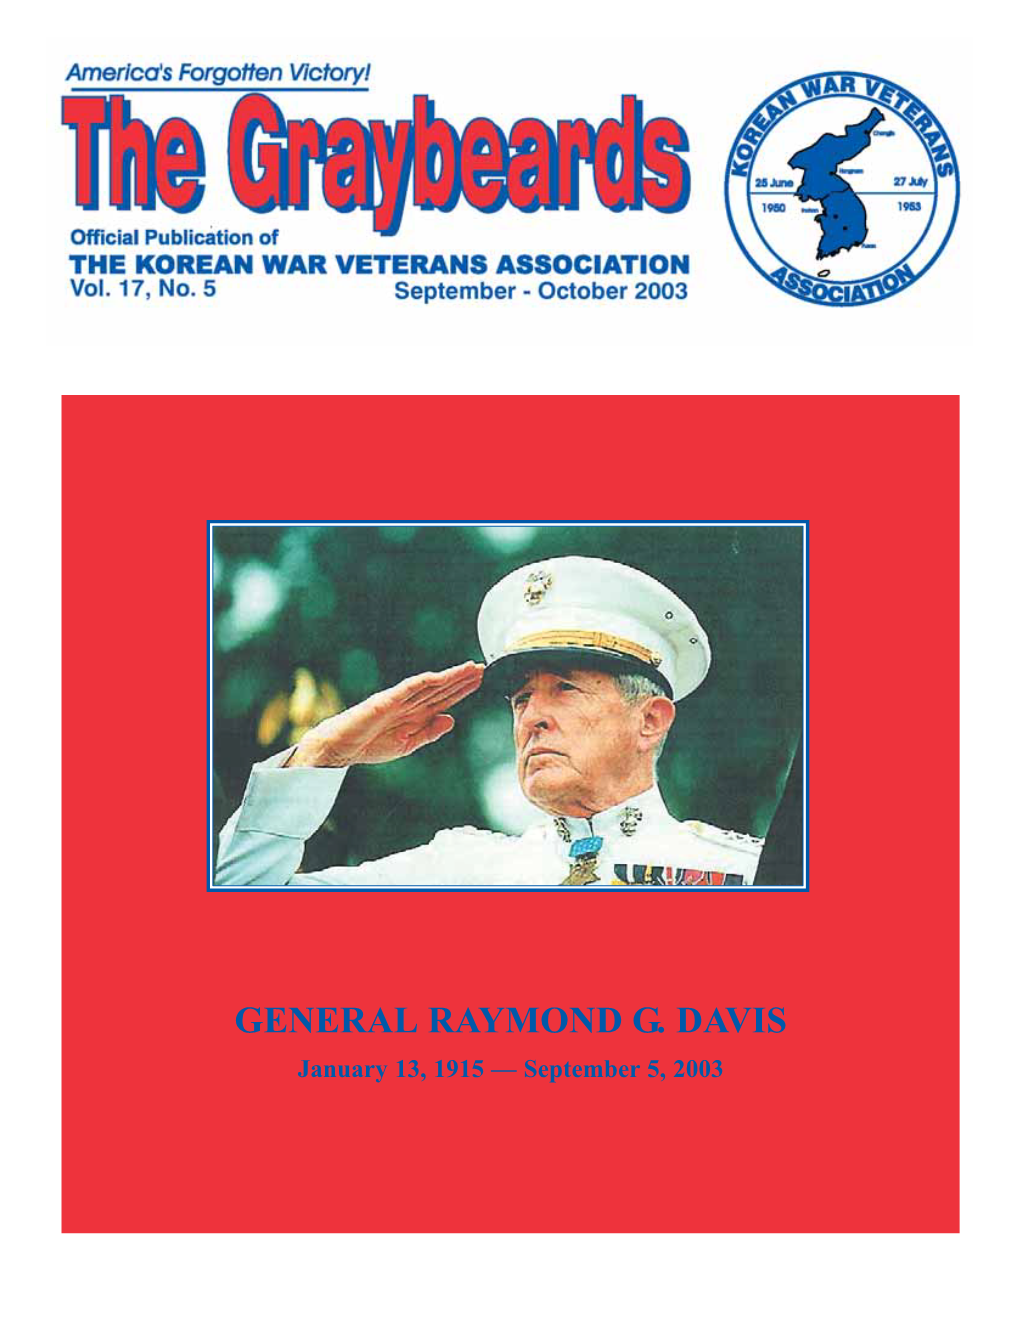 GENERAL RAYMOND G. DAVIS January 13, 1915 — September 5, 2003 Joseph Pirrello 70 Turf Road, Staten Island, NY 10314-6015 PH: 718-983-6803 the Graybeards Charles R